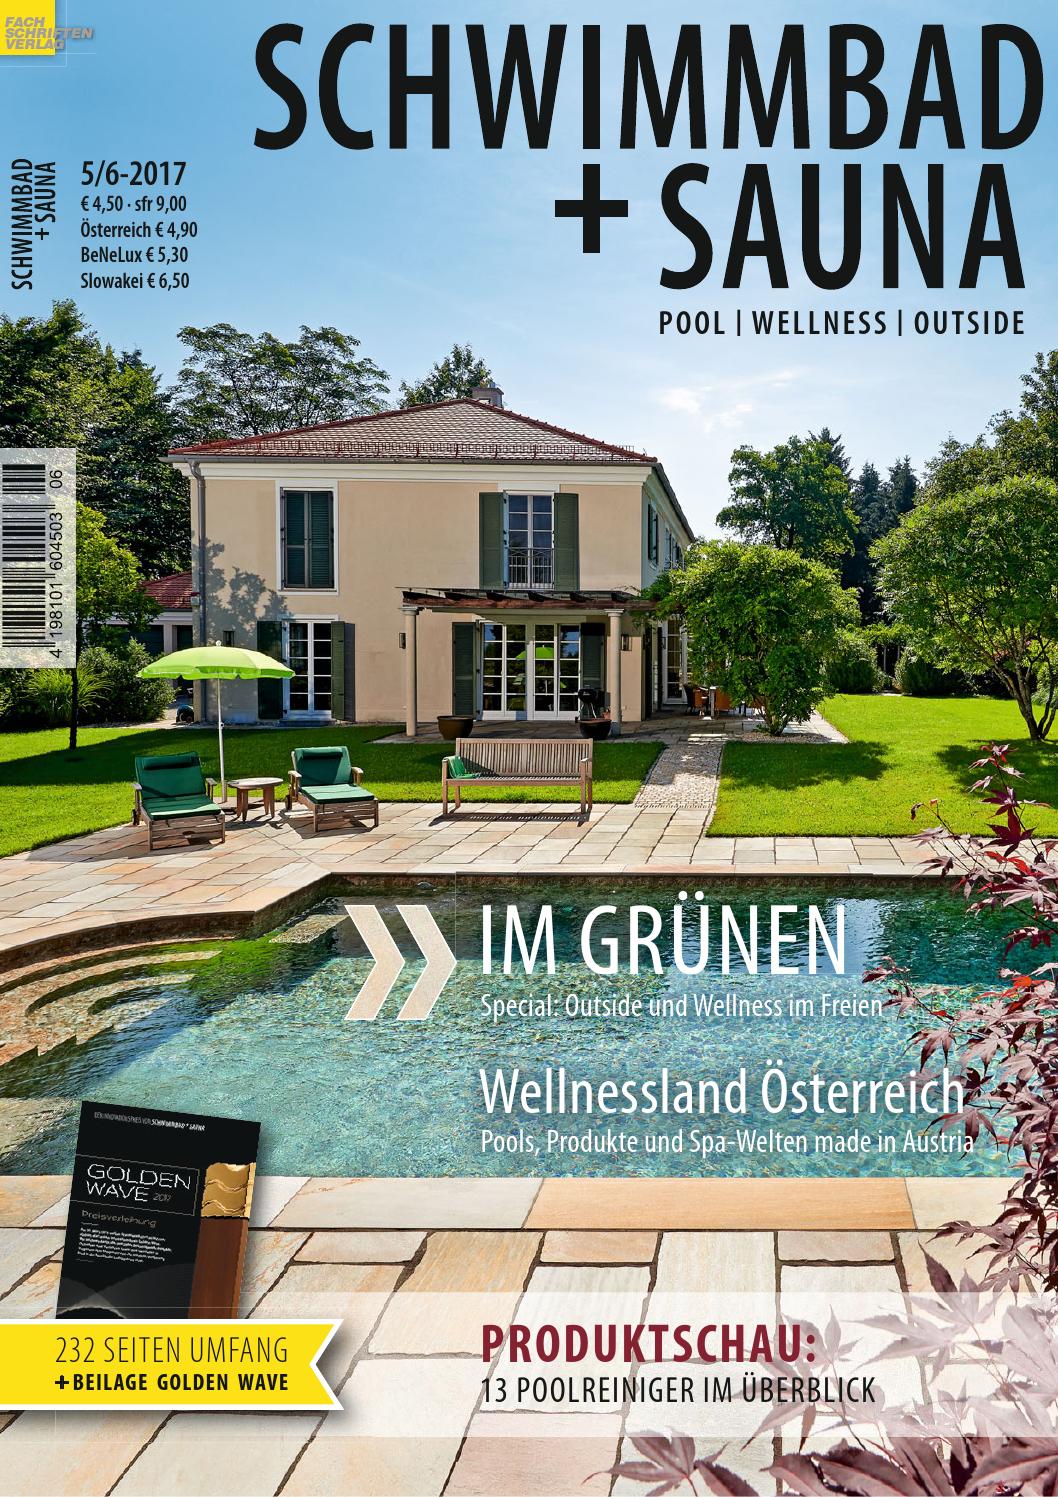 Gartenshop Fiedler Genial Schwimmbad Sauna 5 6 2017 by Fachschriften Verlag issuu